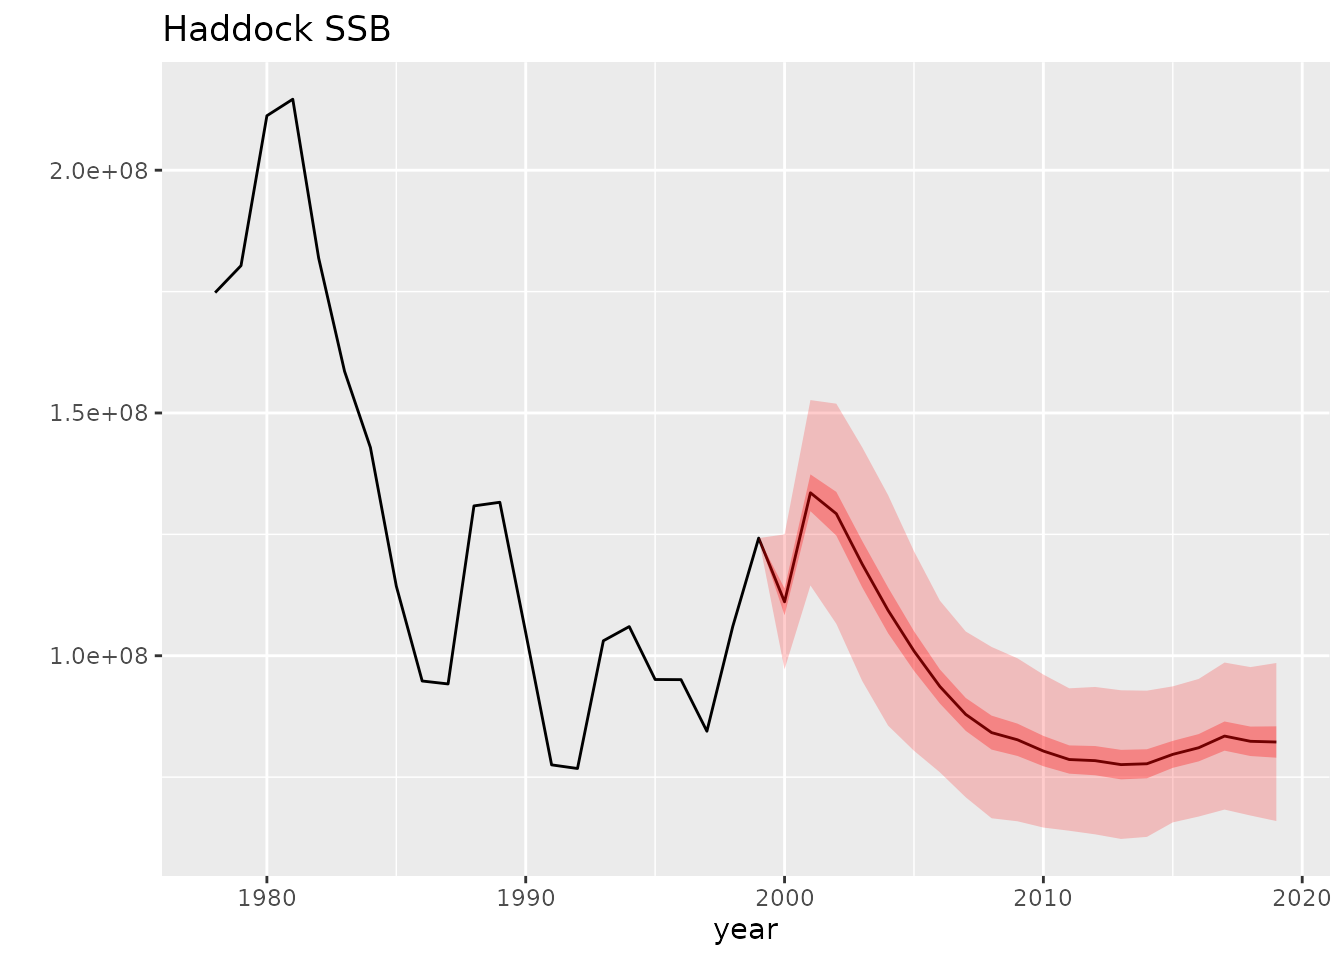 Haddock model (parallel-runs) performance metrics